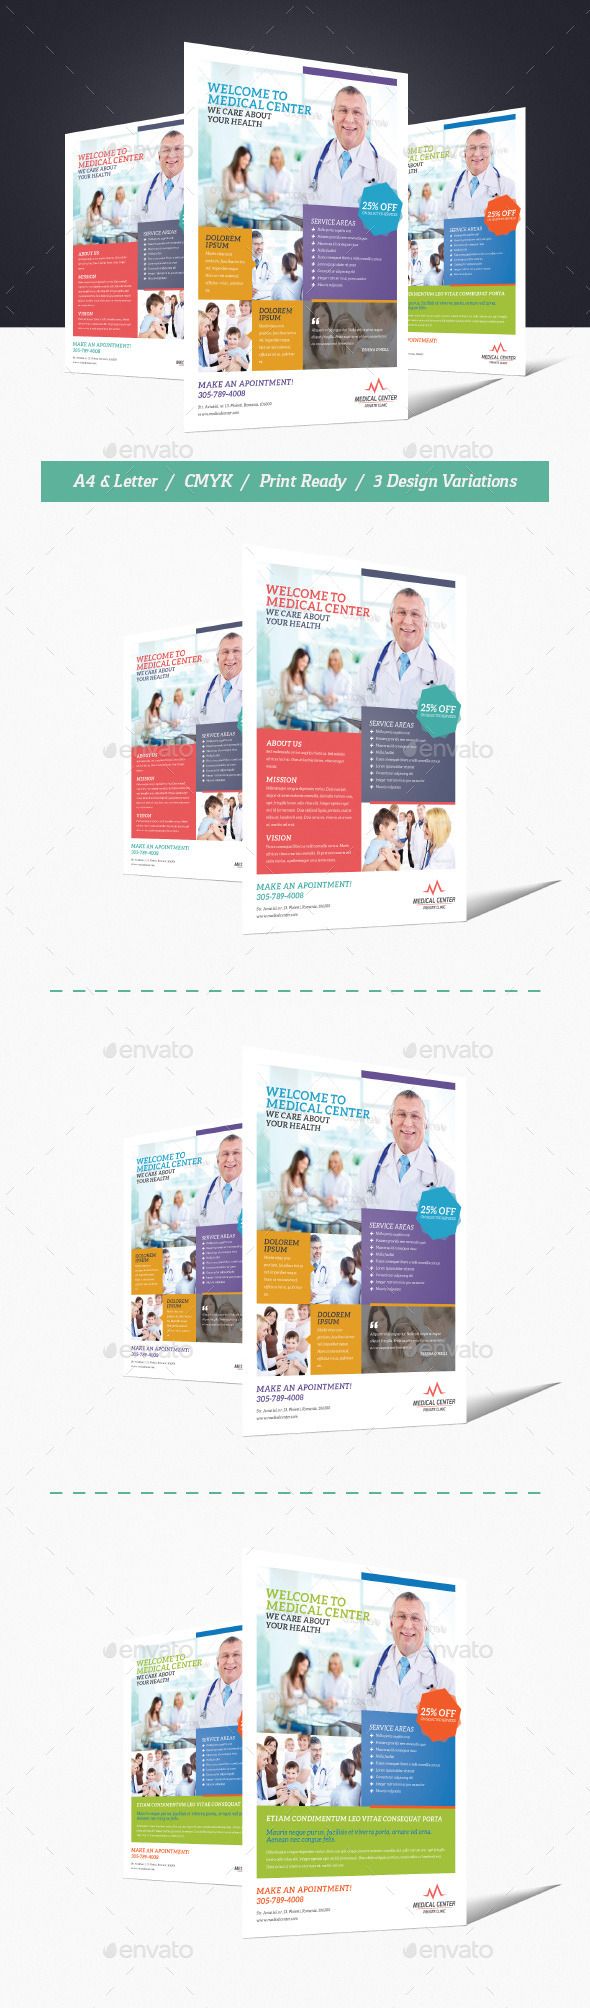 Healthcare-Advertising-Medical-Center-Flyer-—-Photoshop-PSD-Medical-services-medical-center-•-Ava Healthcare Advertising : Medical Center Flyer — Photoshop PSD #Medical services #medical center • Ava...